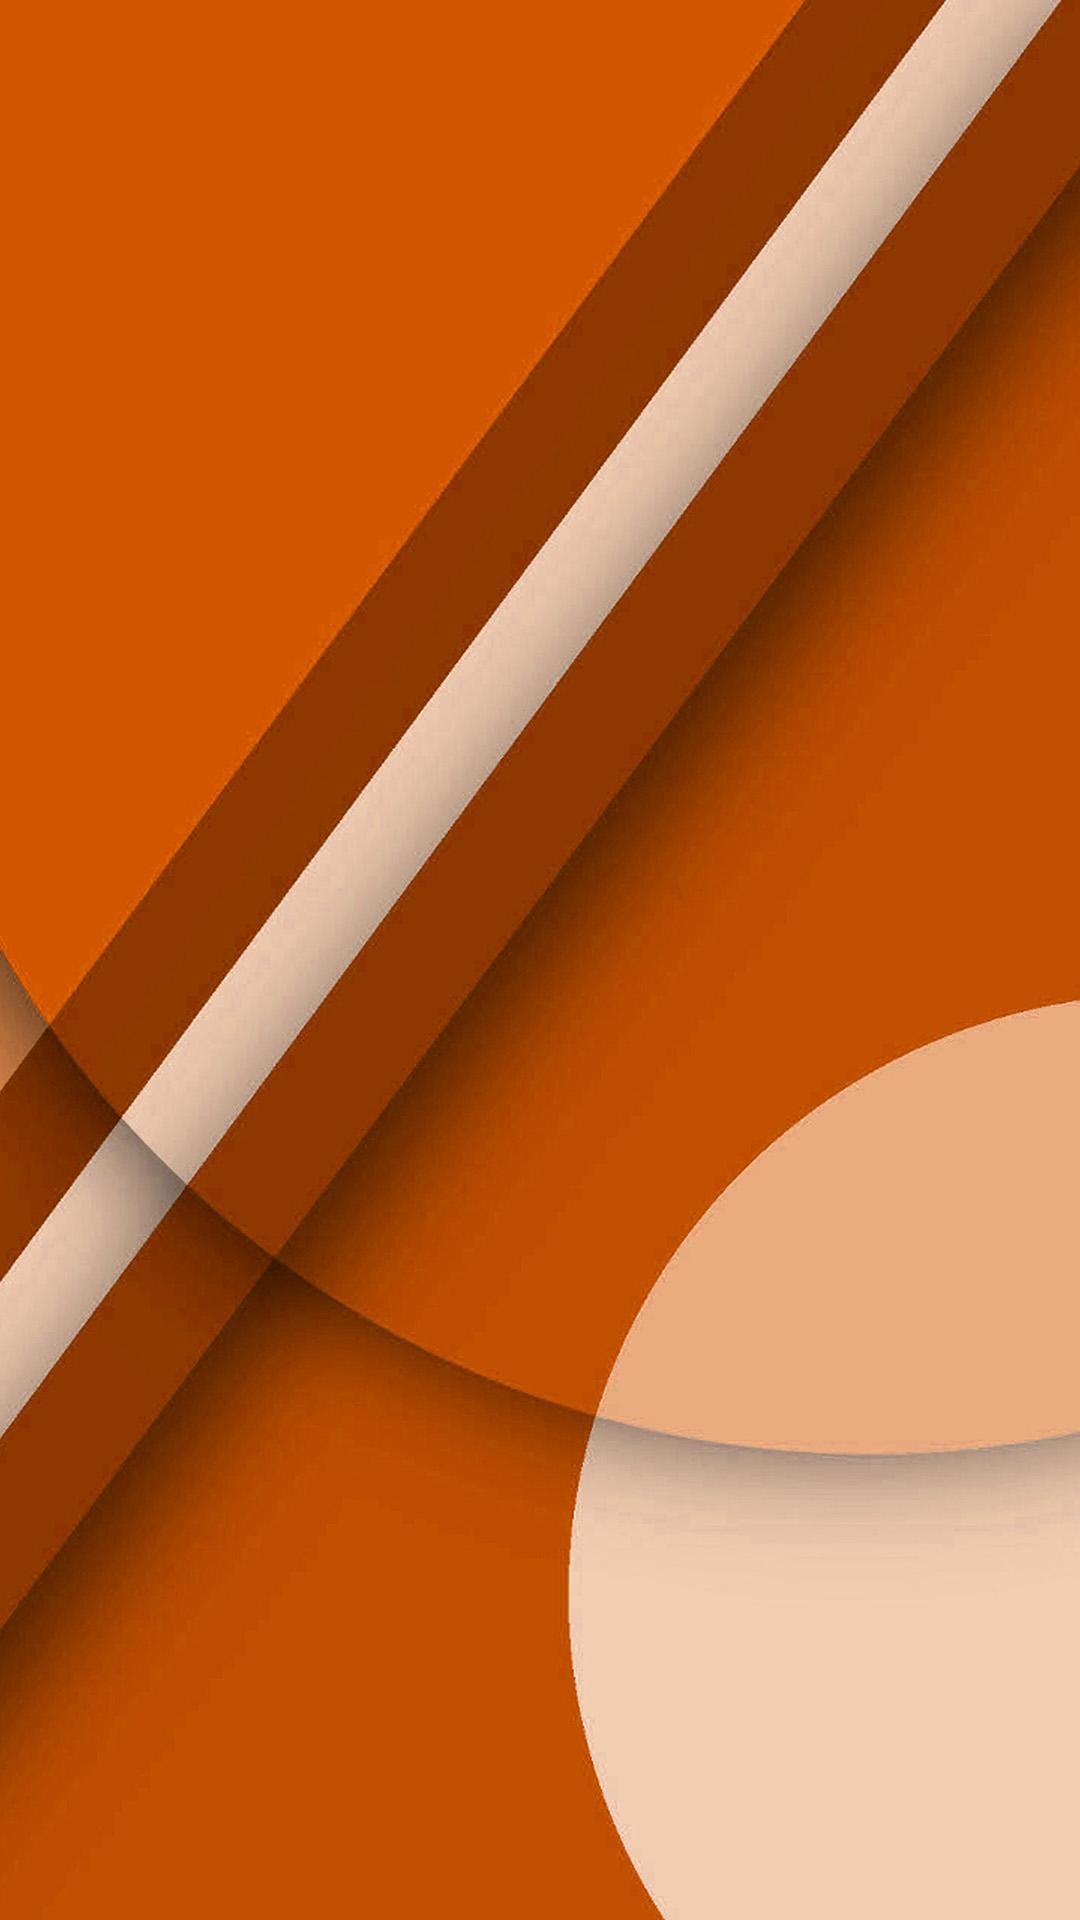 Beautiful Orange Geometric iPhone 6 Plus Wallpaper